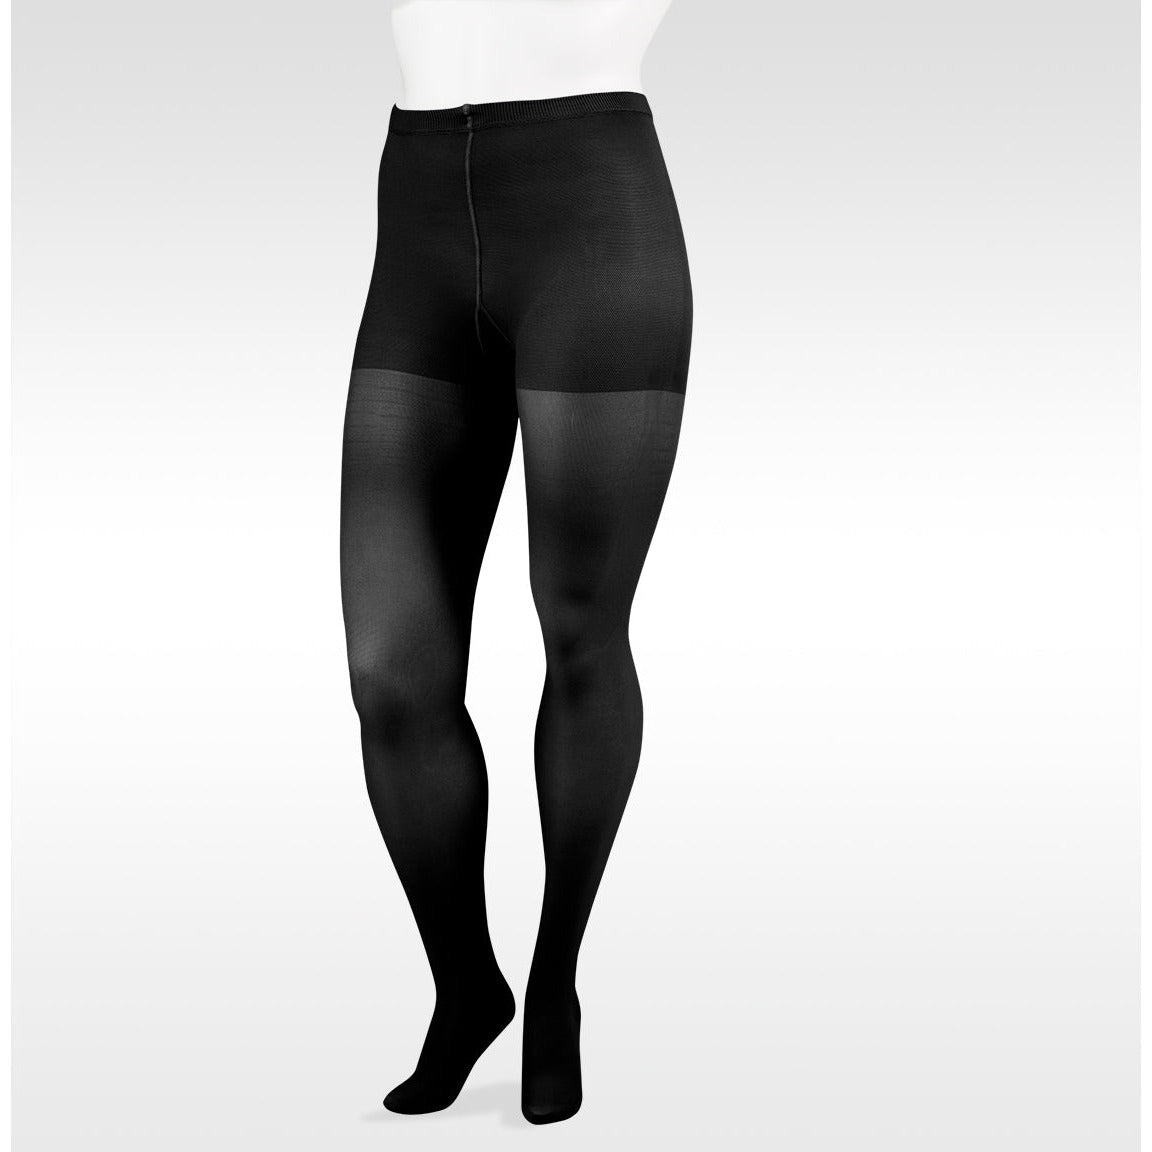 Juzo Soft Pantyhose 30-40 mmHg w/ Elastic Panty, Black